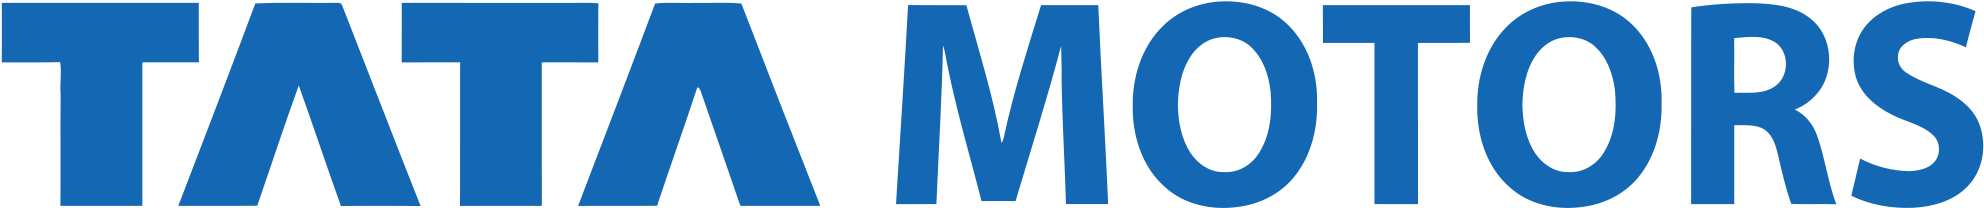 Tata Motors Logo Blue Background PNG